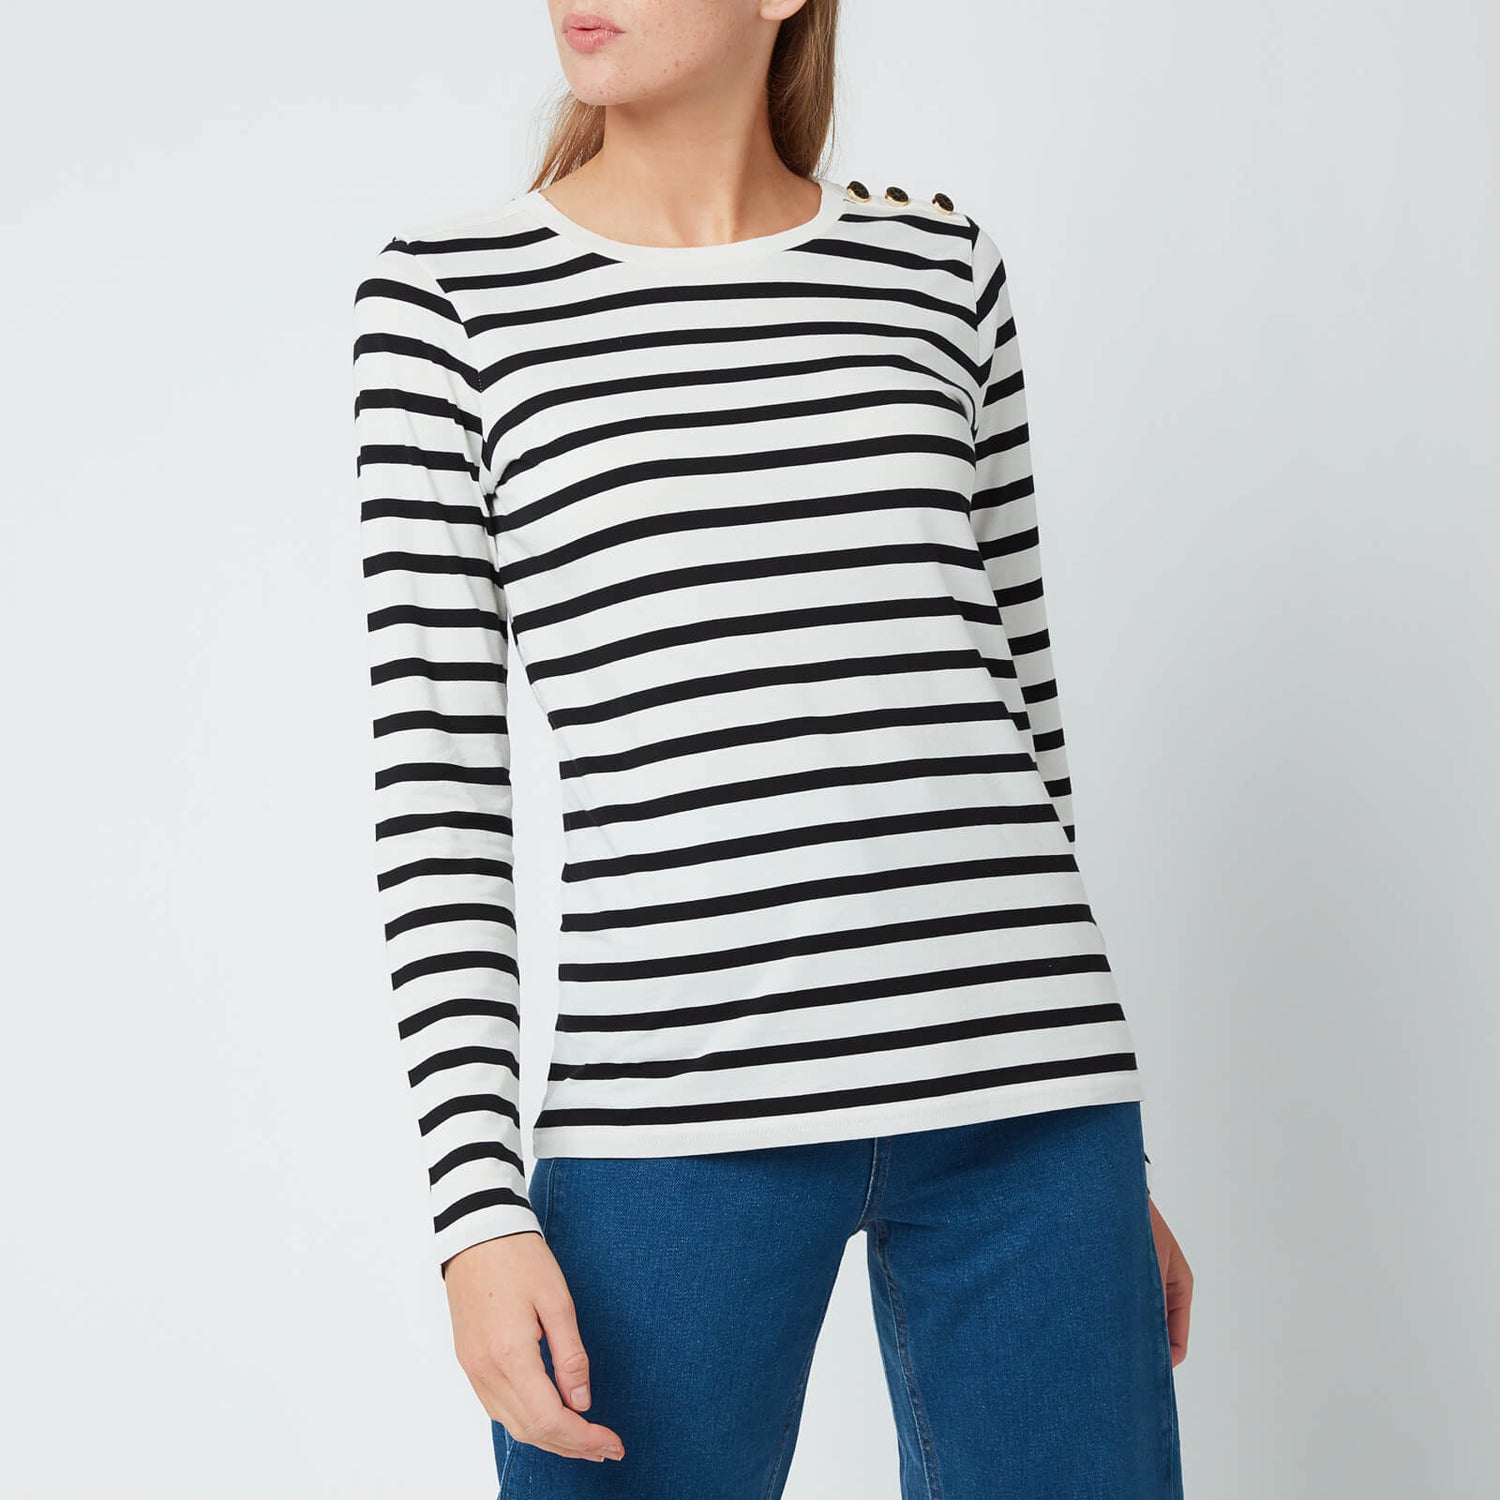 Kate Spade New York Women's Striped Button Shoulder T-Shirt - Cream - XS